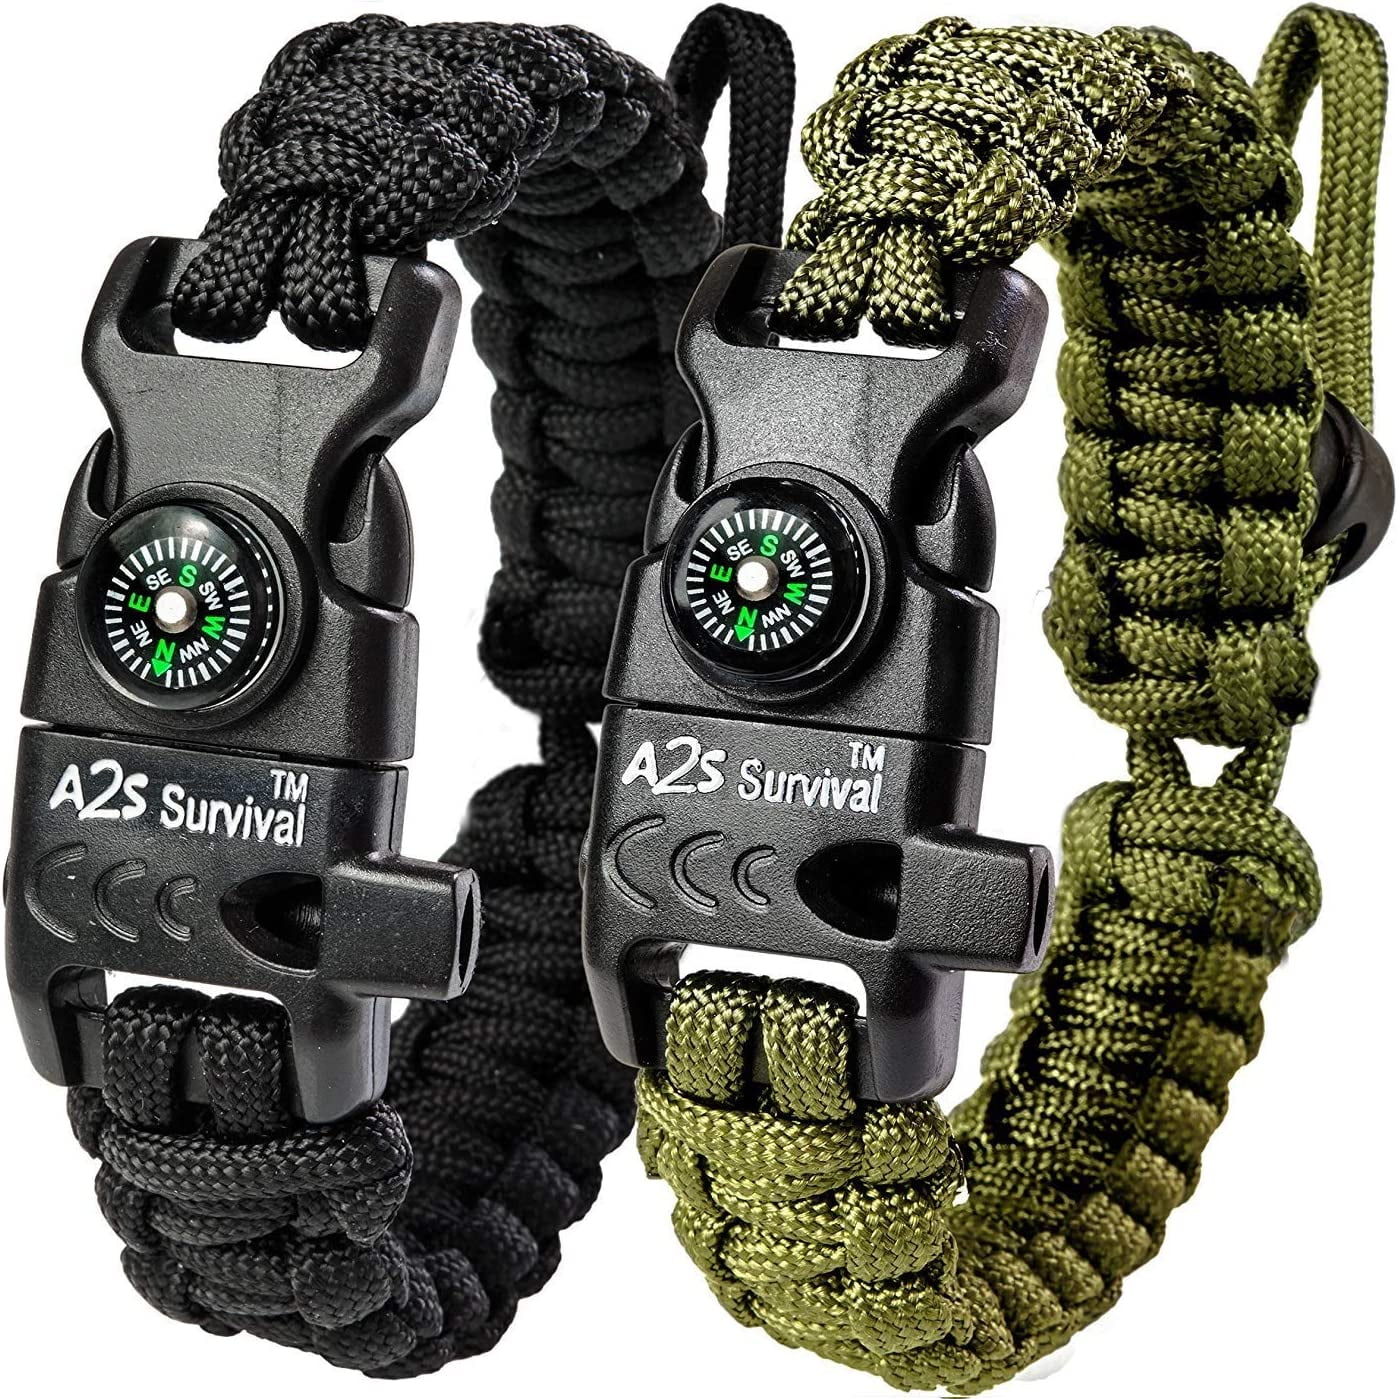 Paracord Bracelet K2-Peak \\u2013 Survival Bracelets with Embedded Compass  Whistle EDC Hiking Gear- Camping Gear Survival Gear Emergency Kit 